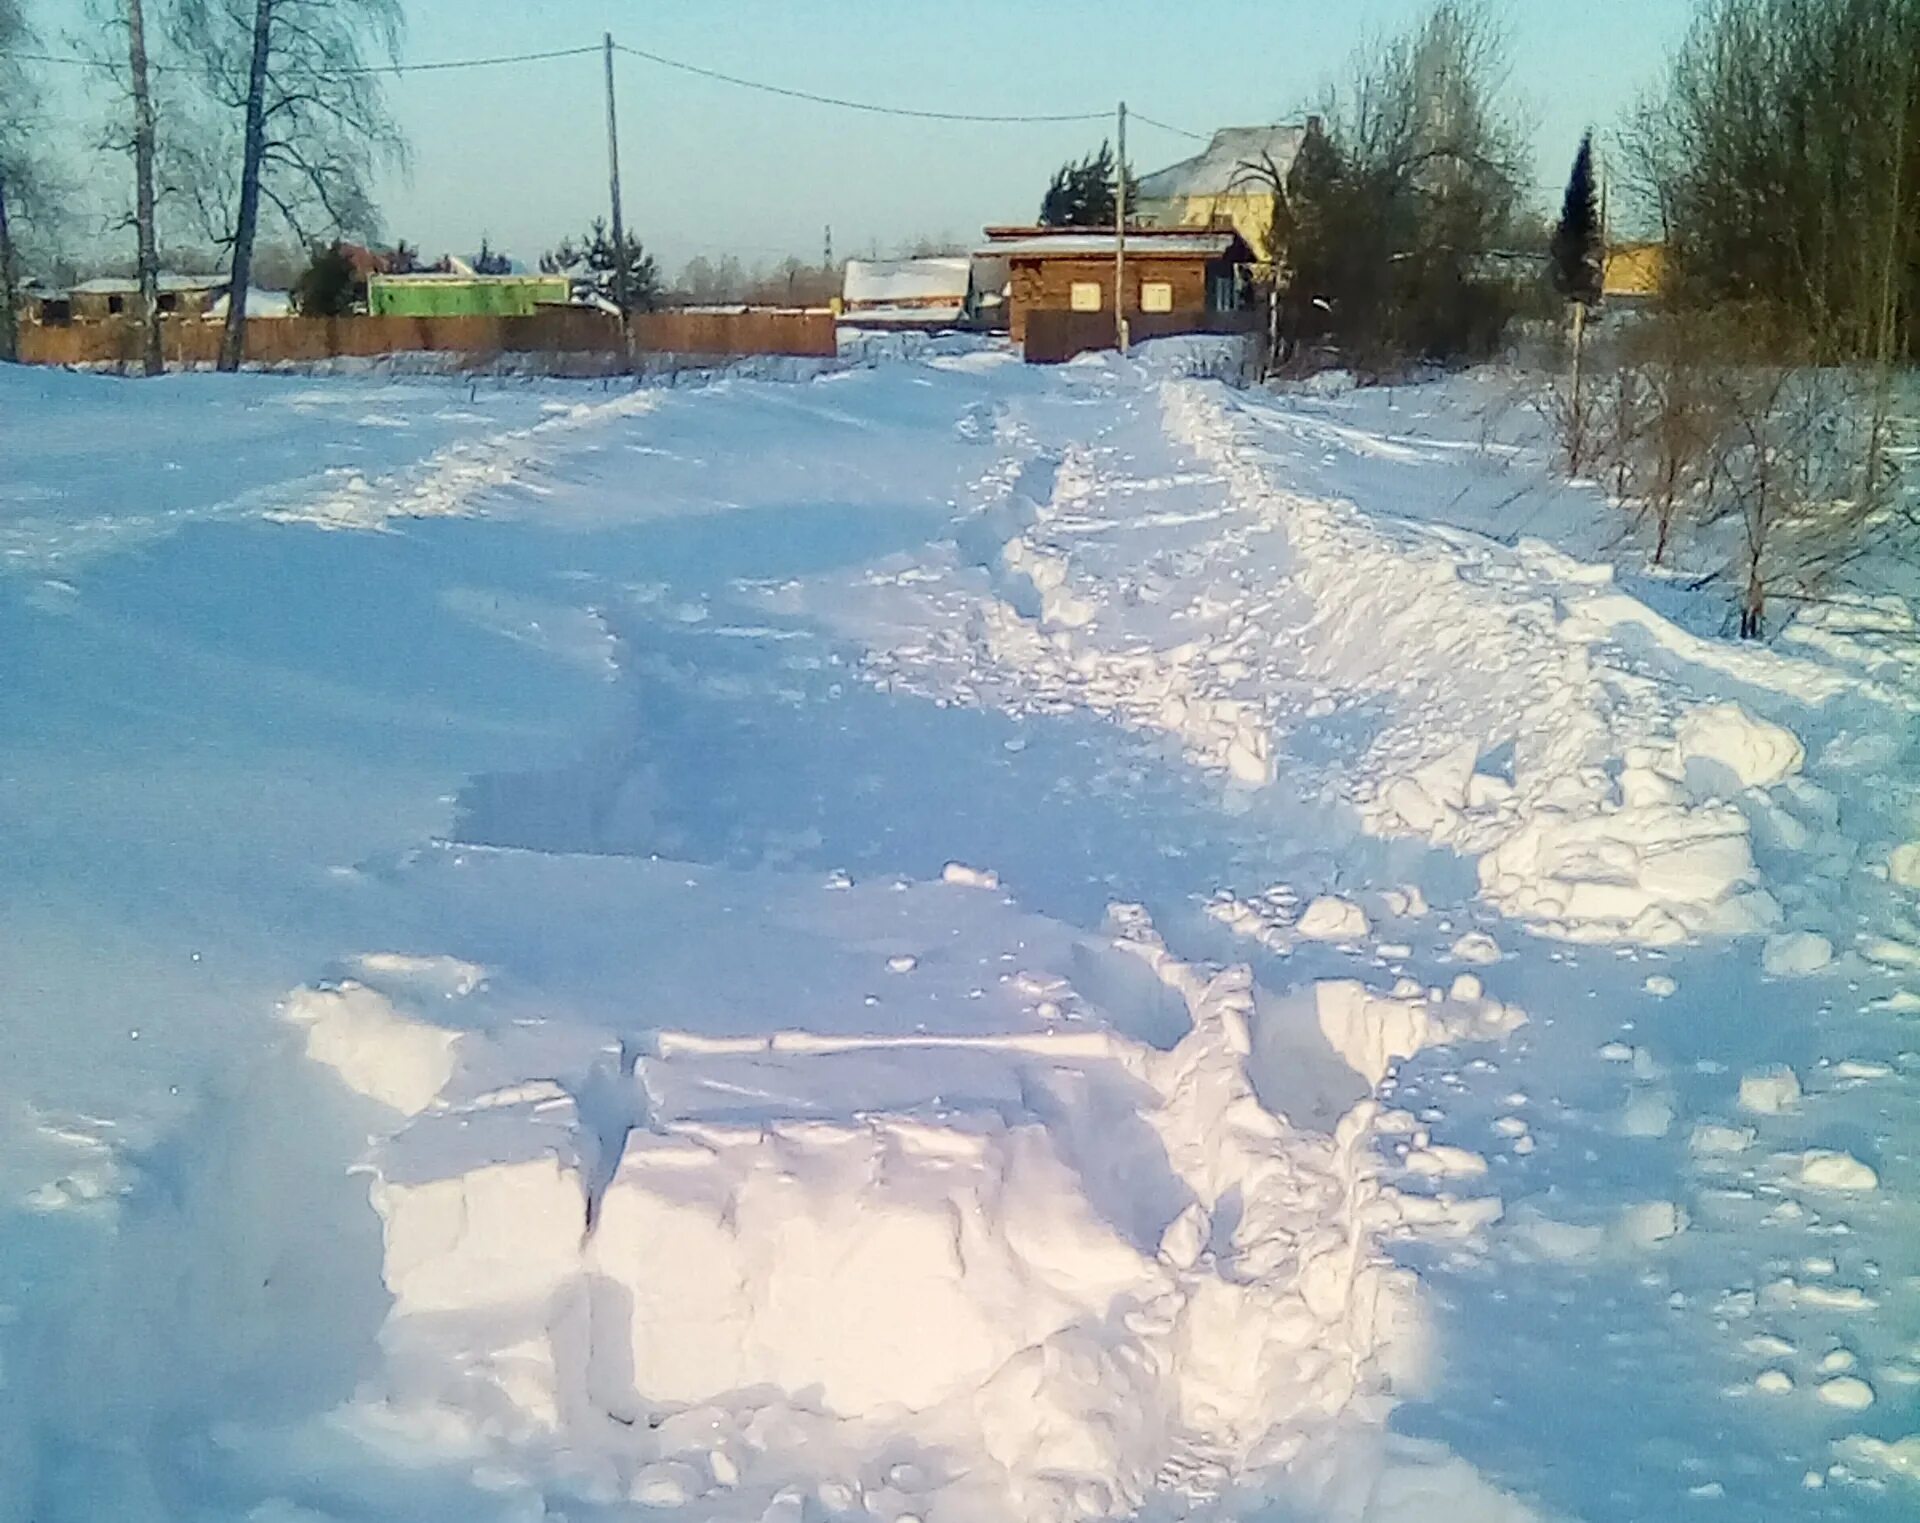 Много снега в деревне. Сугробы в деревне. Снегопад в деревне. Заснеженная дорога в деревне. Деревня сугробы